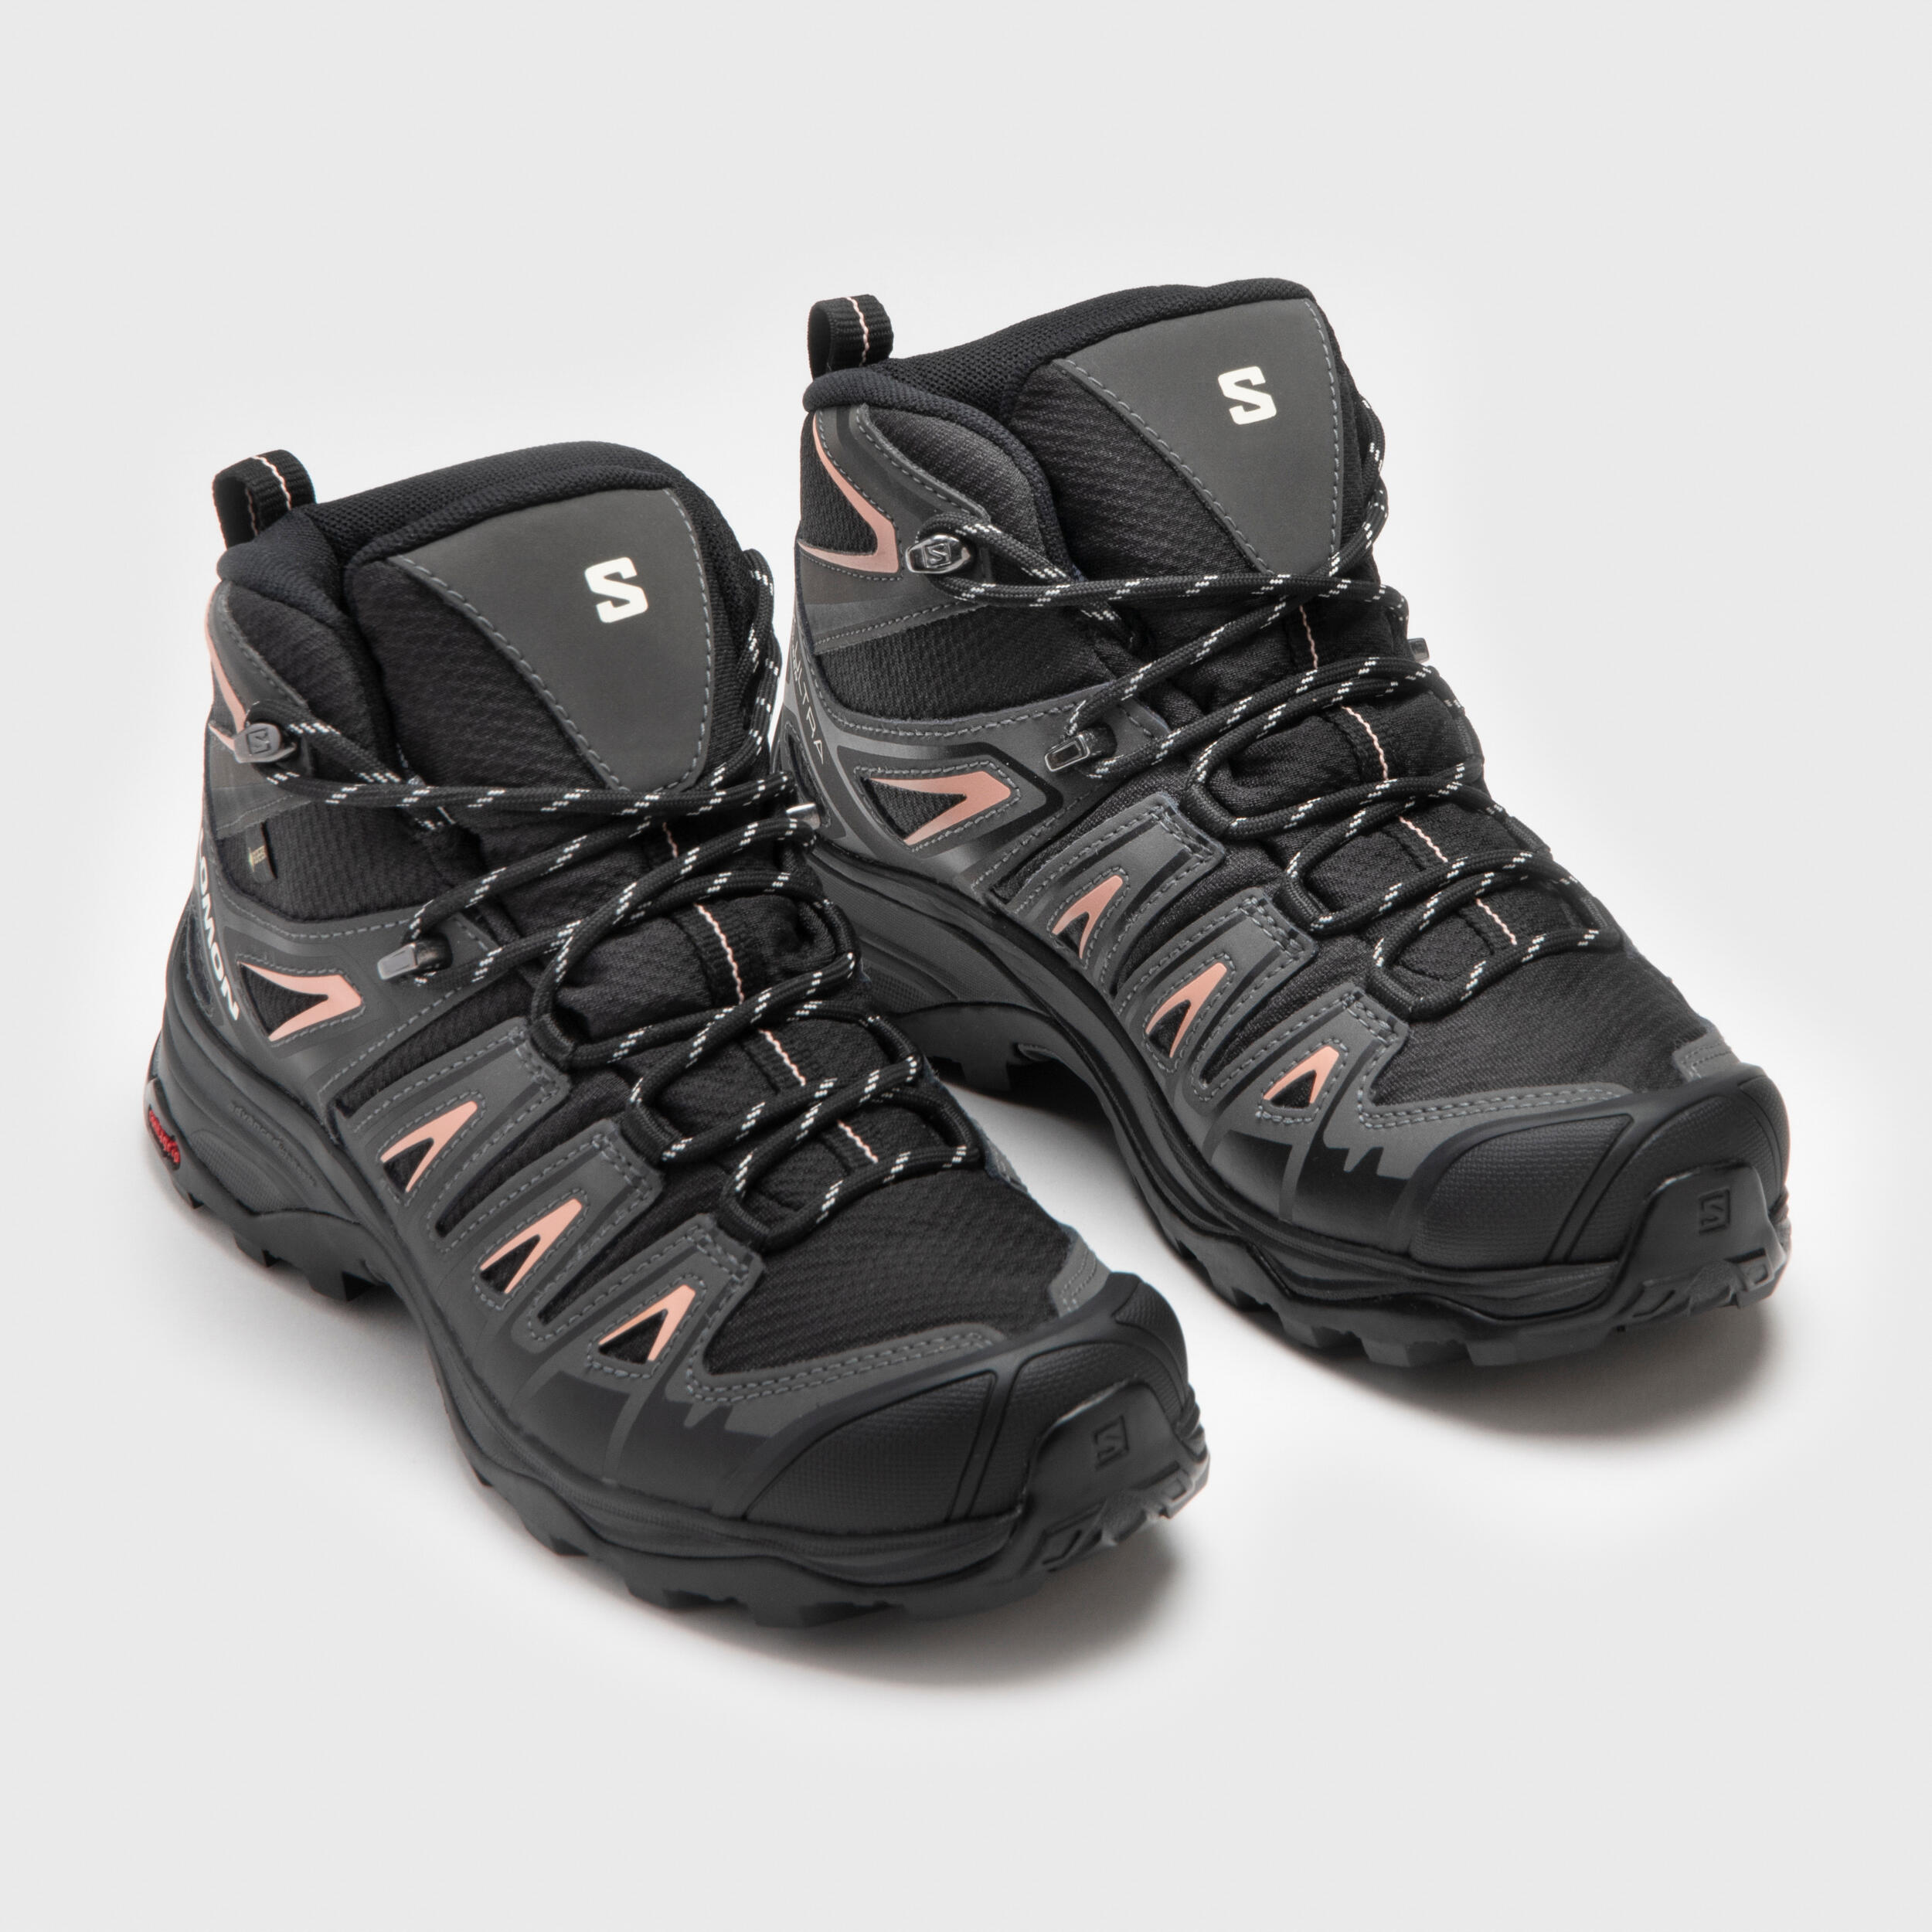 Mountain hiking shoes - Salomon X ULTRA Pioneer GoreTex Mid - Women 4/5